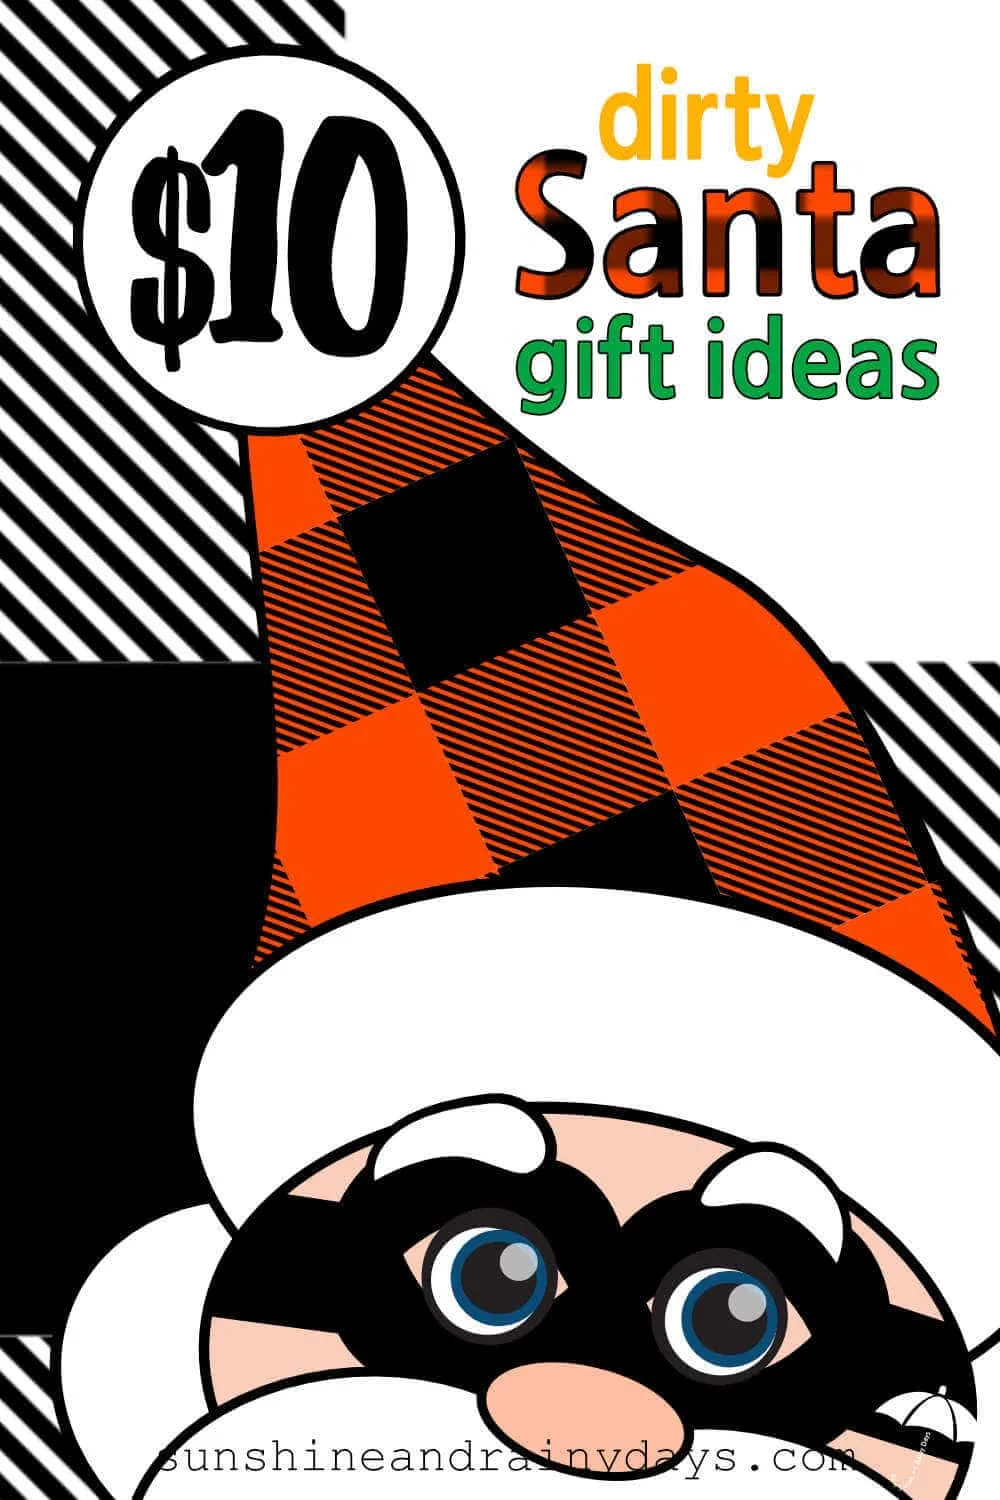 Dirty Santa with the words: $10 Dirty Santa Gift Ideas